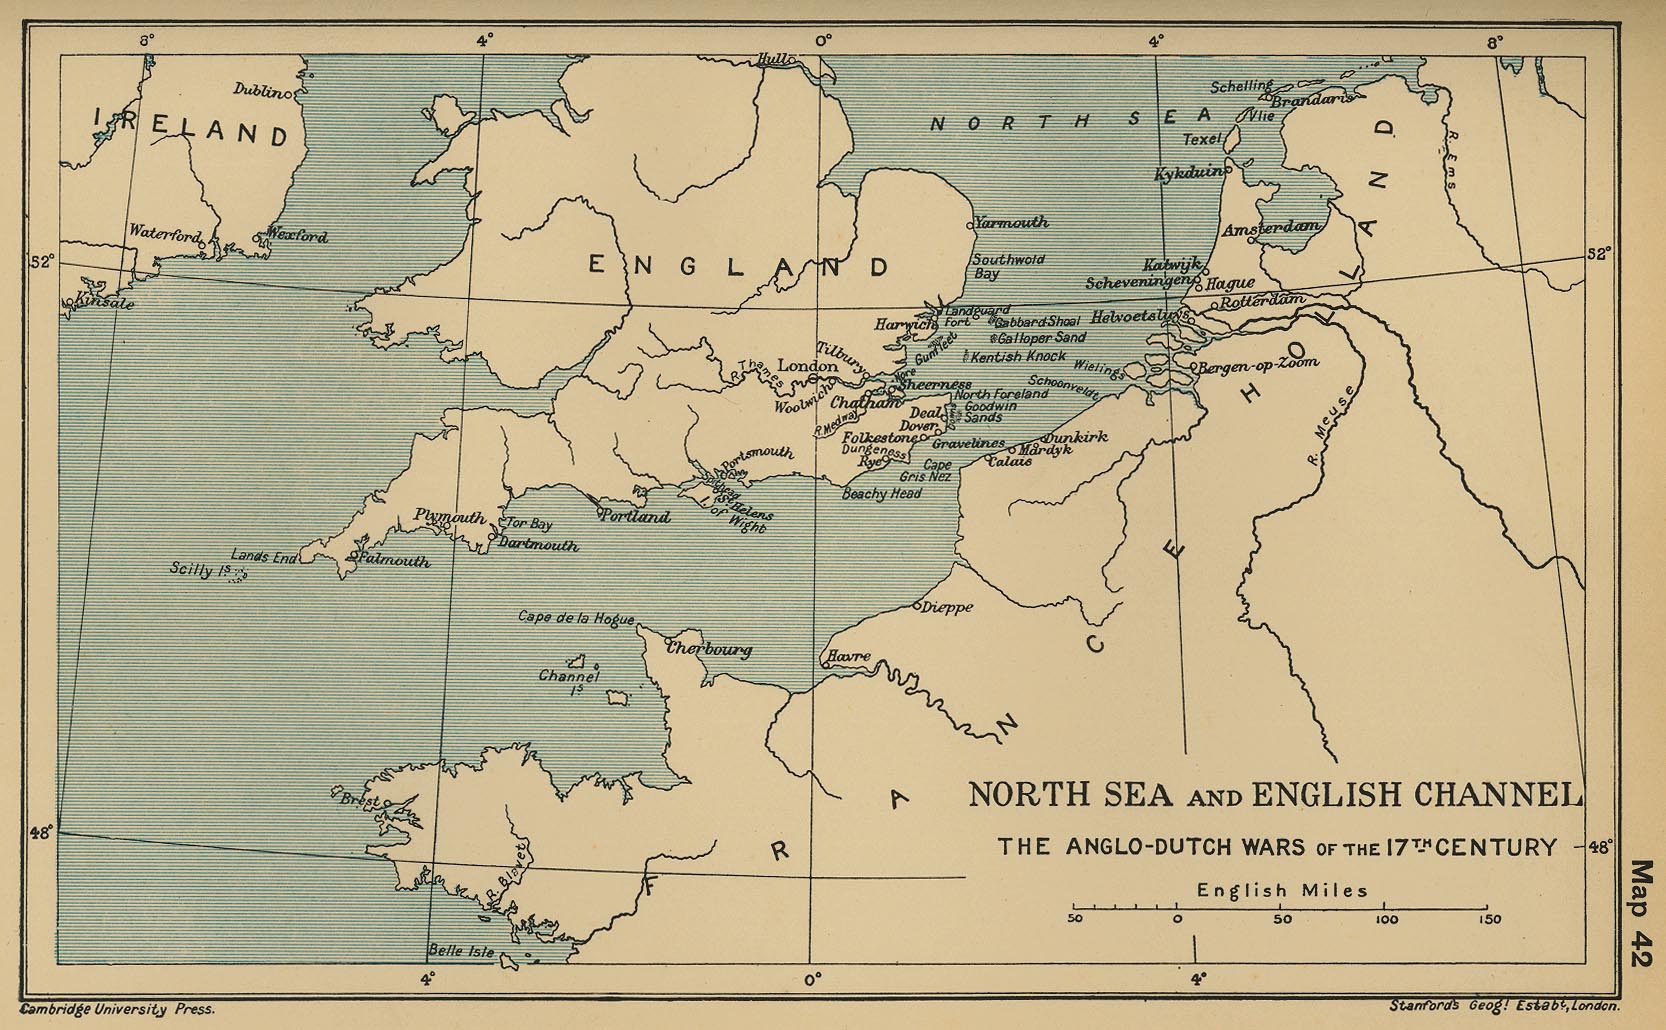 World Map North Sea